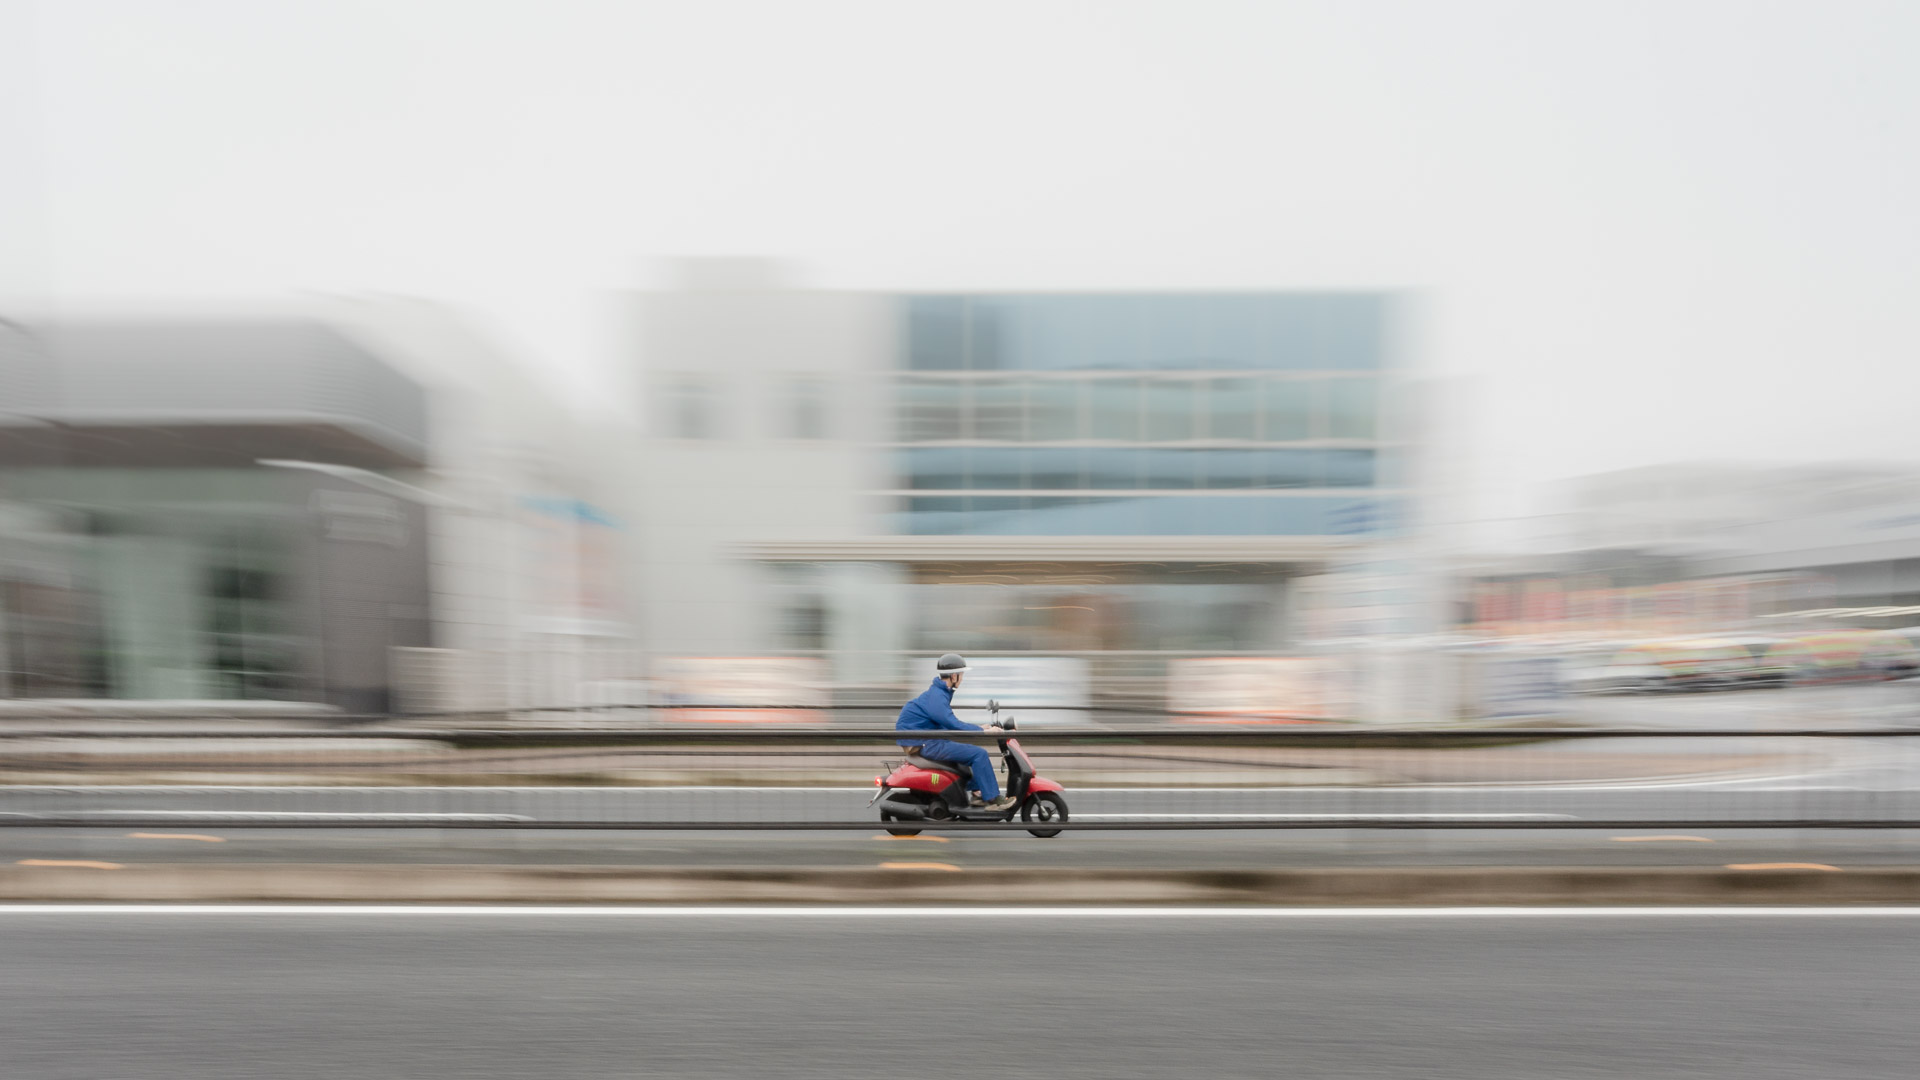 A typical Japanese factory worker seen riding a typical Japanese scooter wearing a typical Japanese  helmet across a typical neighbourhood in Kitakyushu Japan.